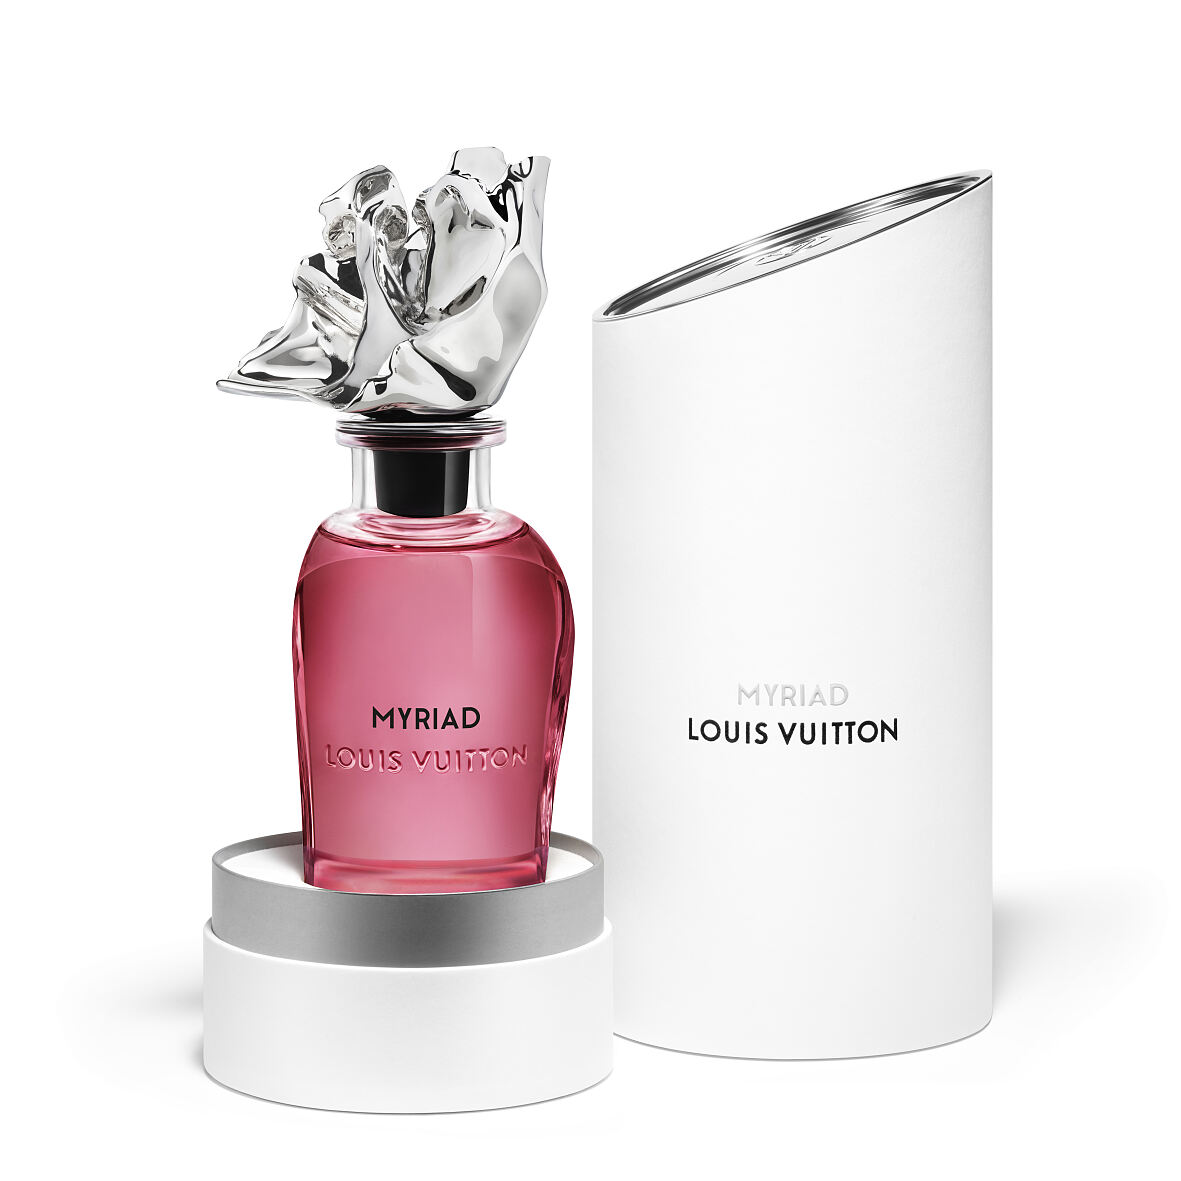 Louis Vuitton_Myriad_Packshot (2)